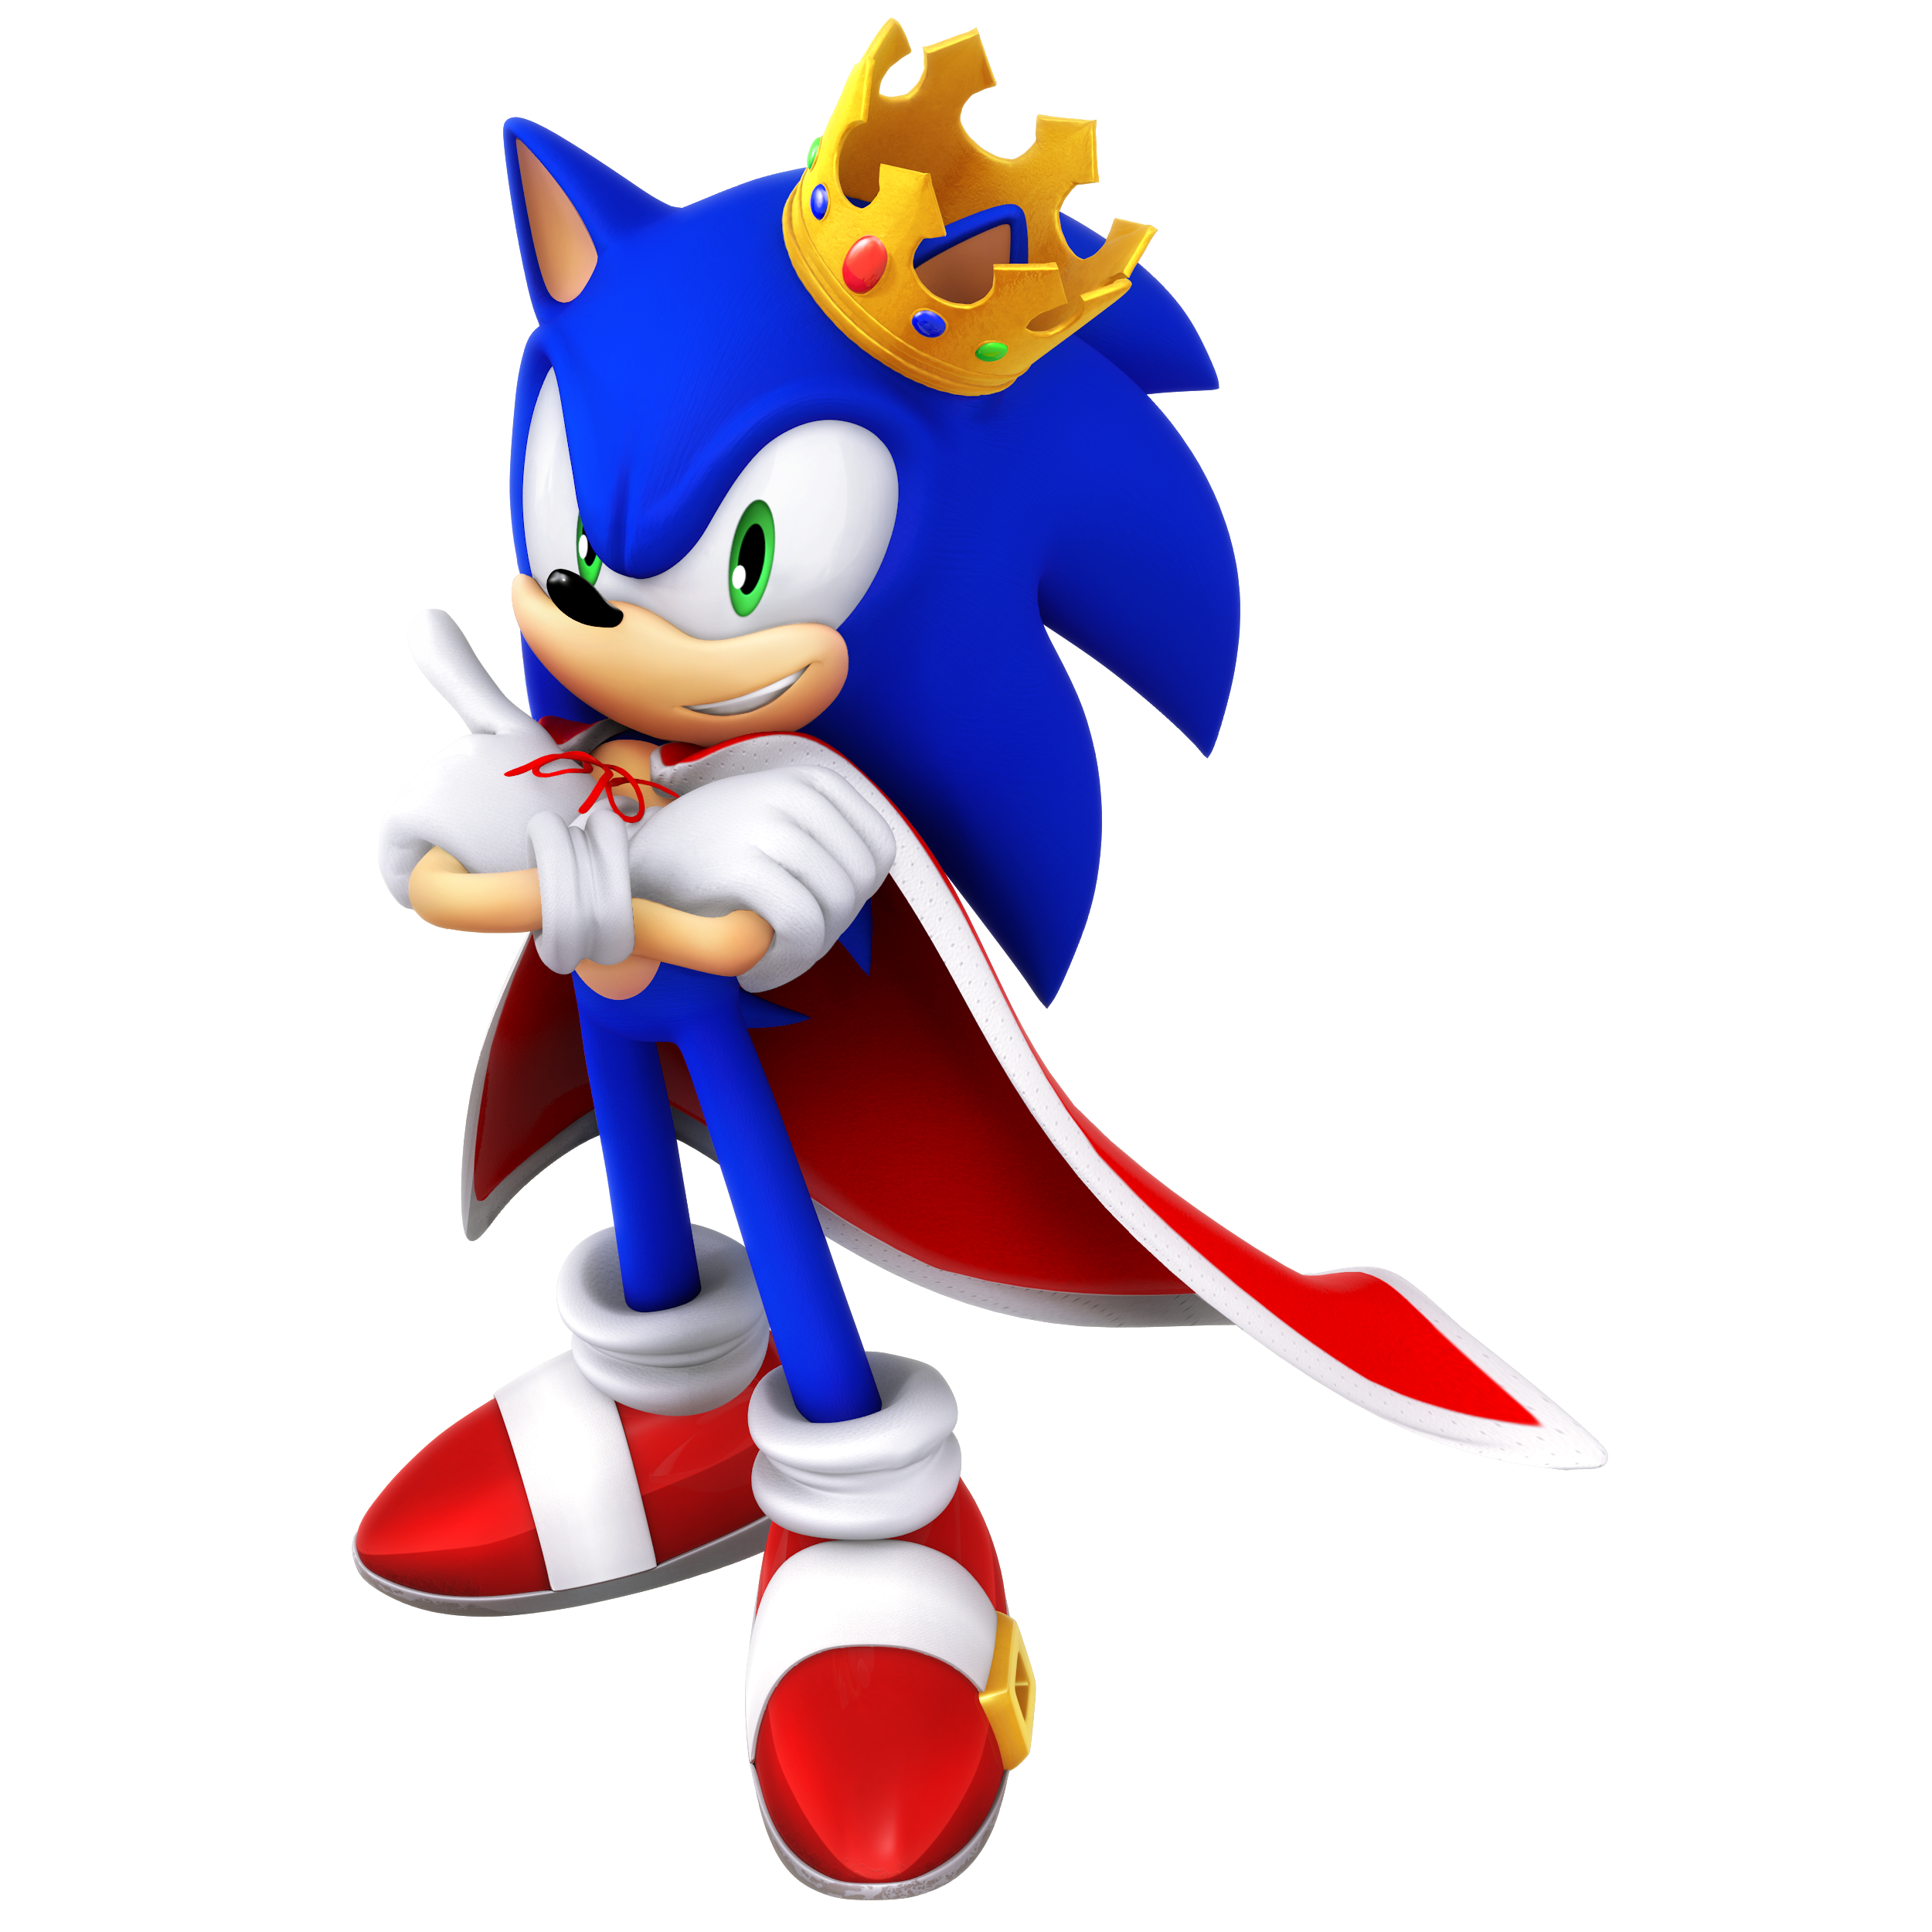 Sonic The Hedgehog 2020 Render by Nibroc-Rock on DeviantArt